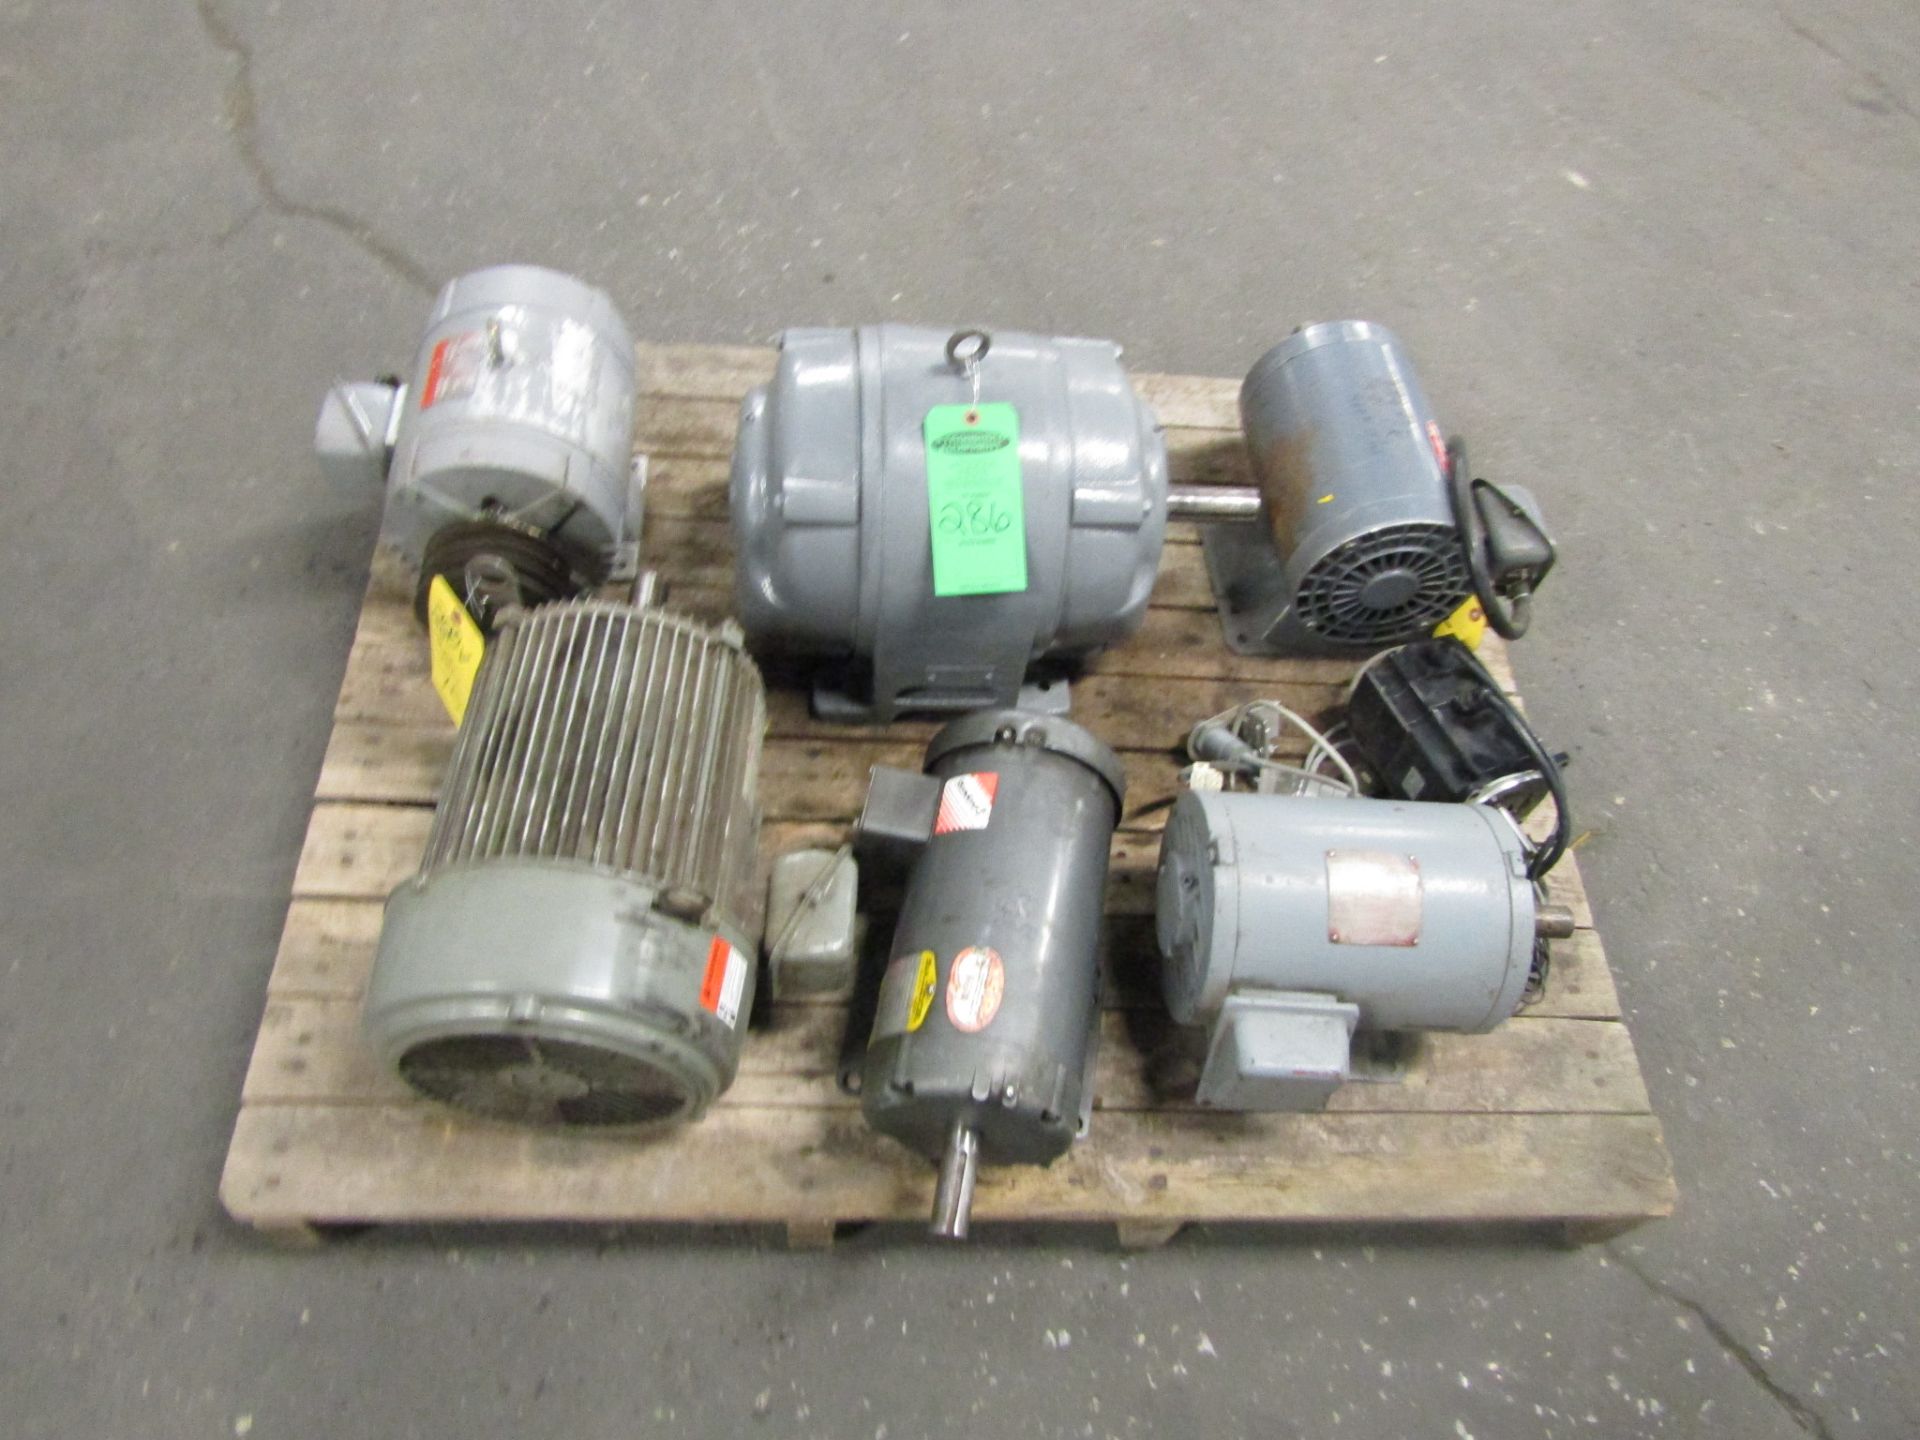 Lot of 7 Pumps - Yaskawa, GE 5HP, Unimount 7.5HP, Westinghouse 5HP, Dayton and more